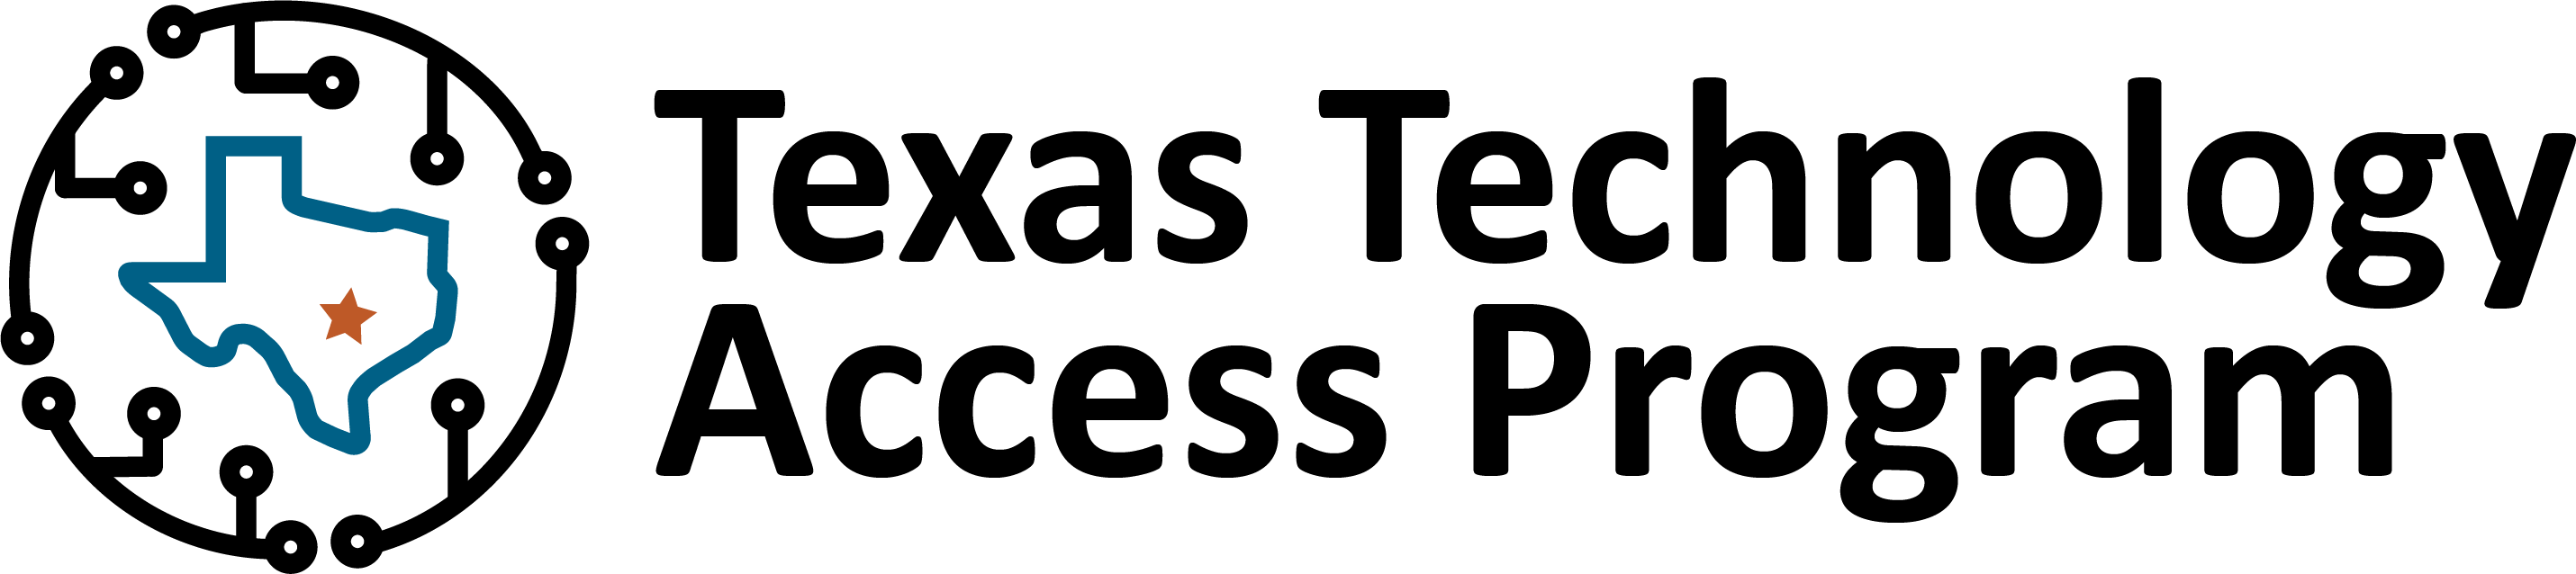 Logo for Texas Technology Access Program